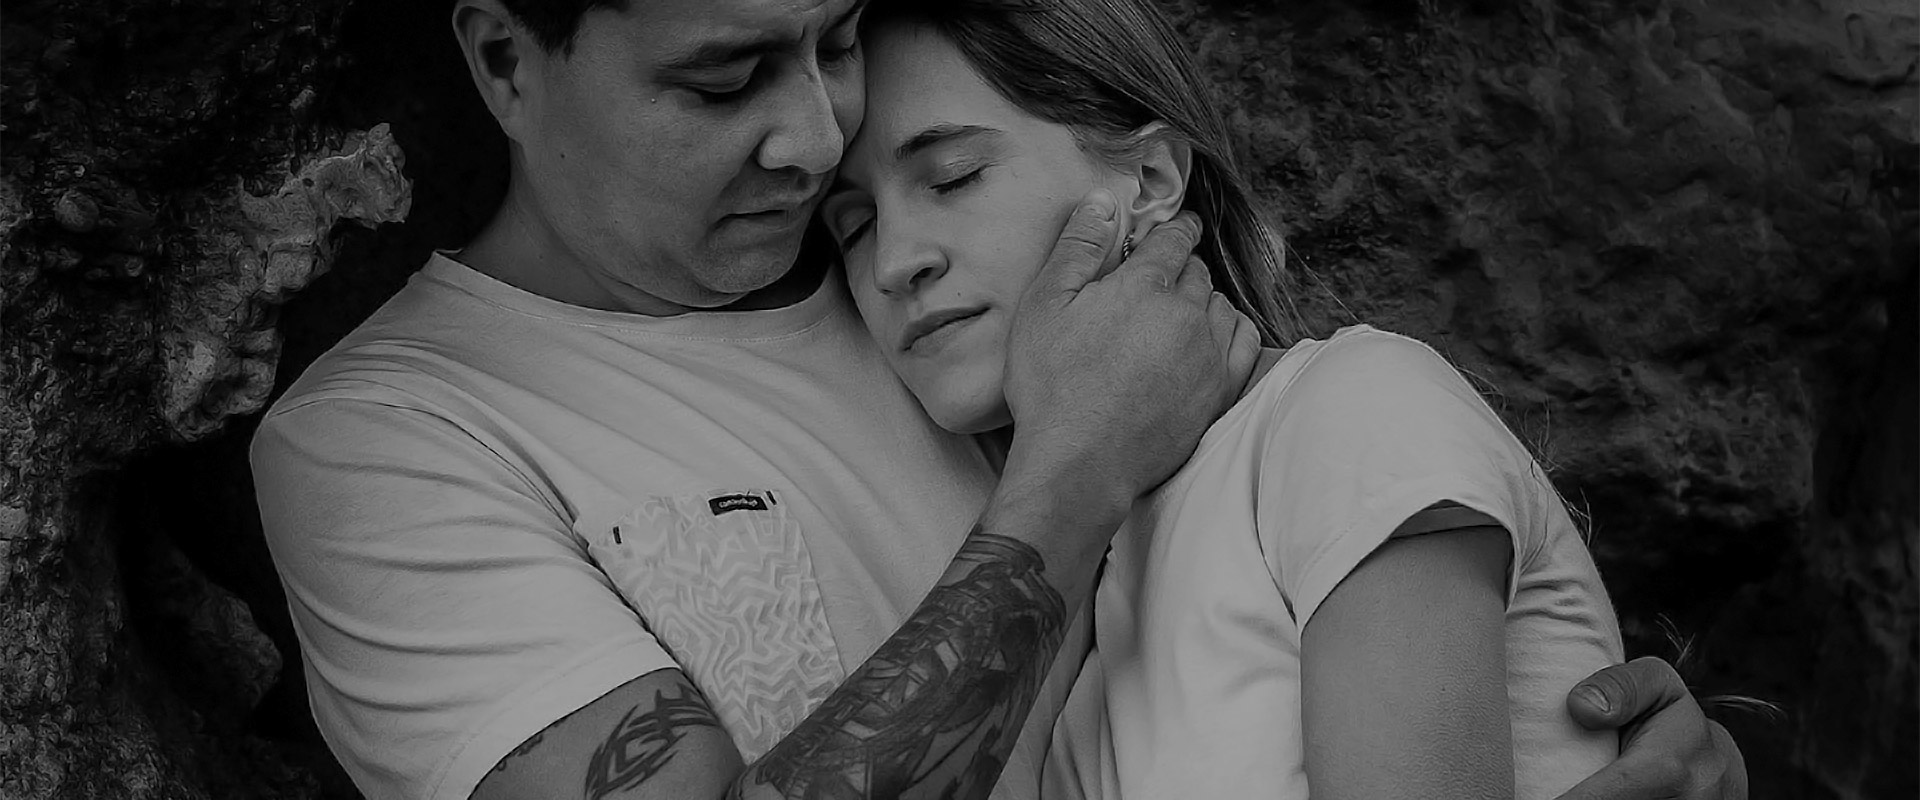 Novios abrazados, momento íntimo en la sesión de fotos preboda por el fotógrafo Esteban Lago